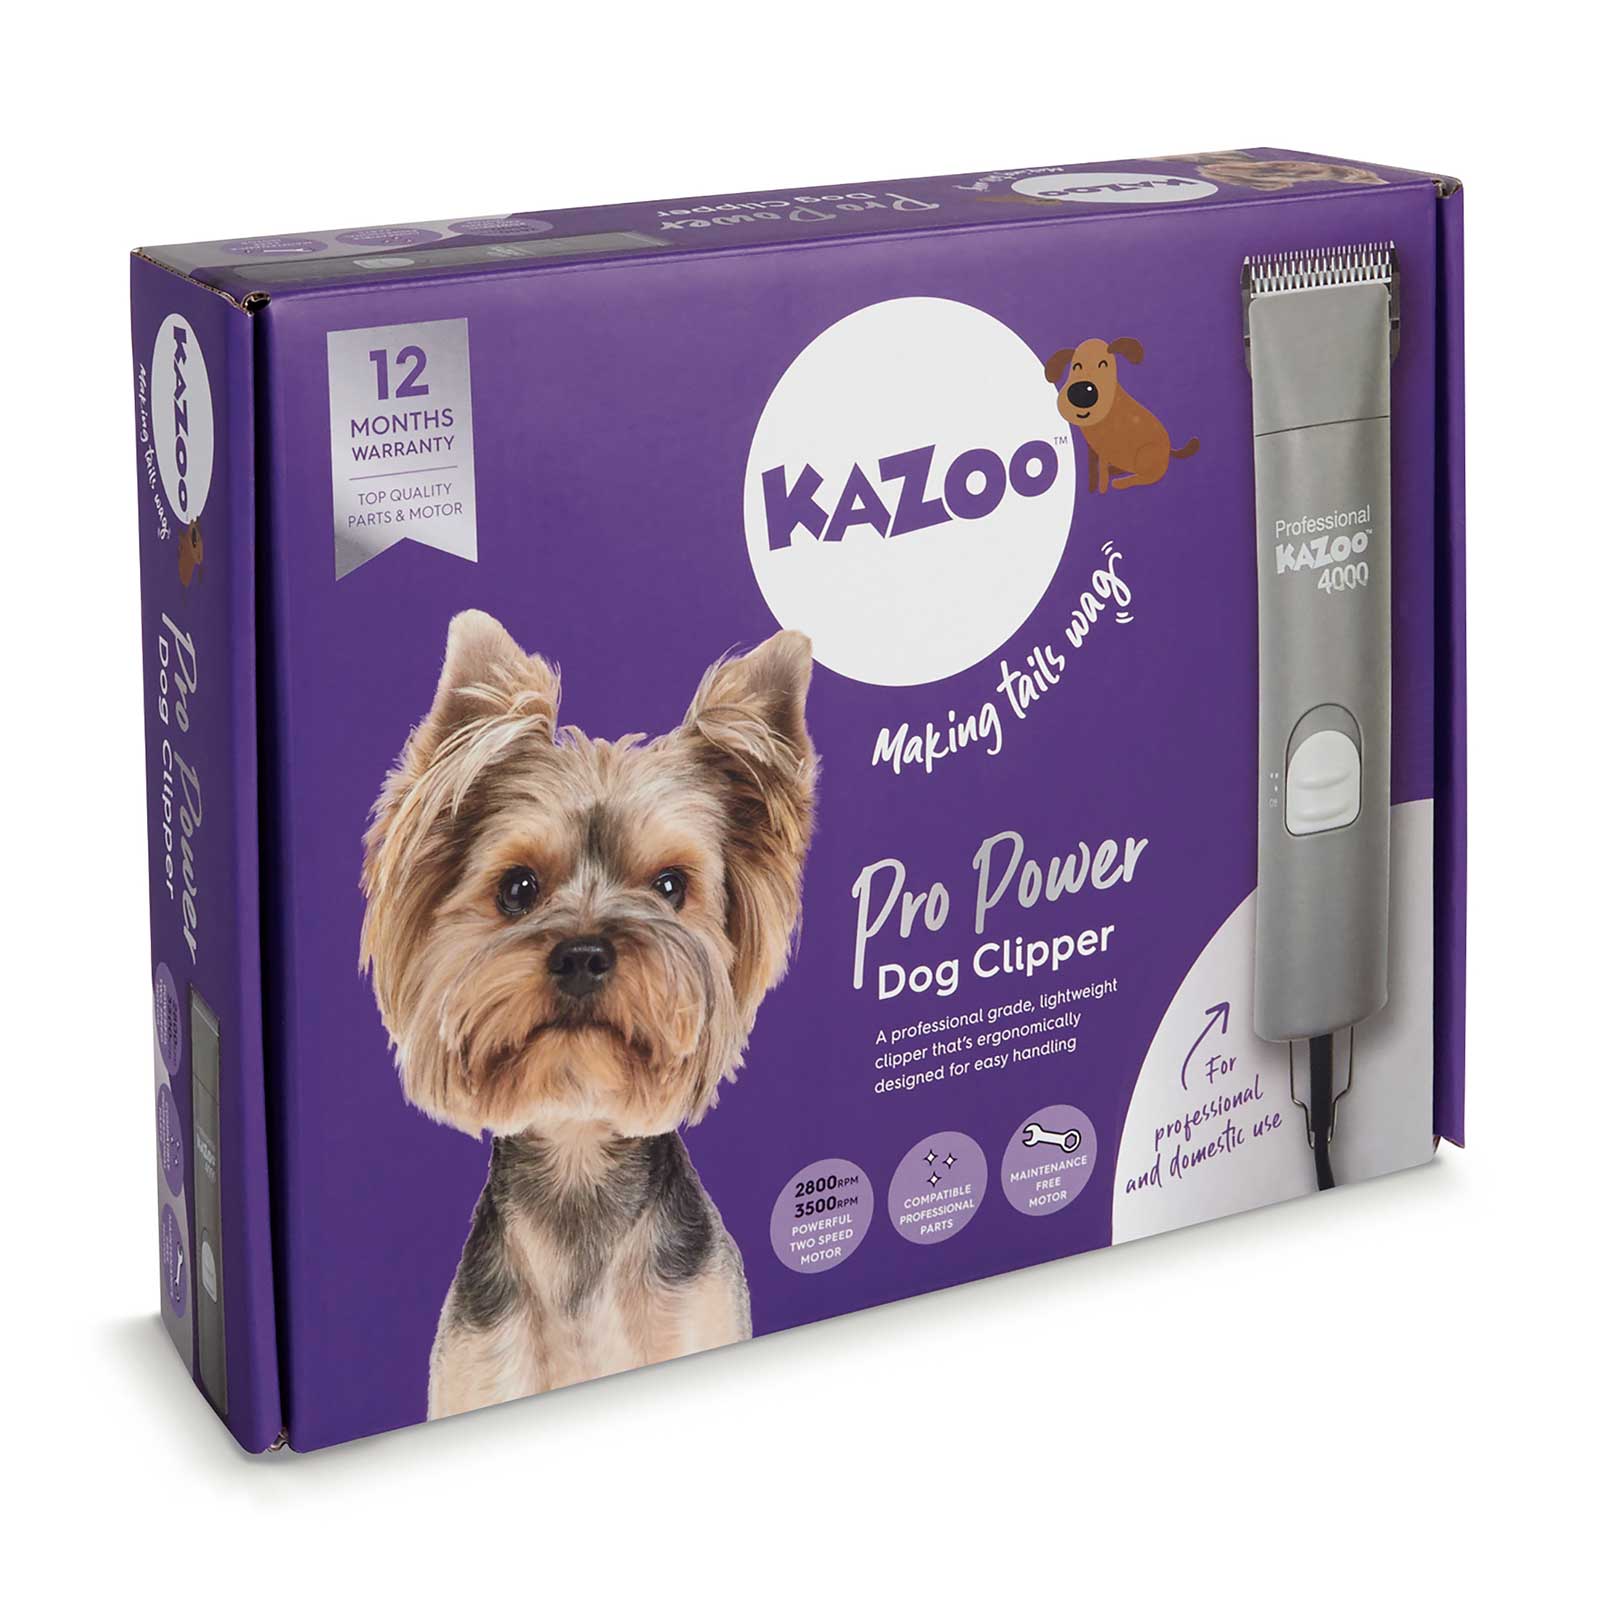 Kazoo Dog Clipper Pro Power 4000